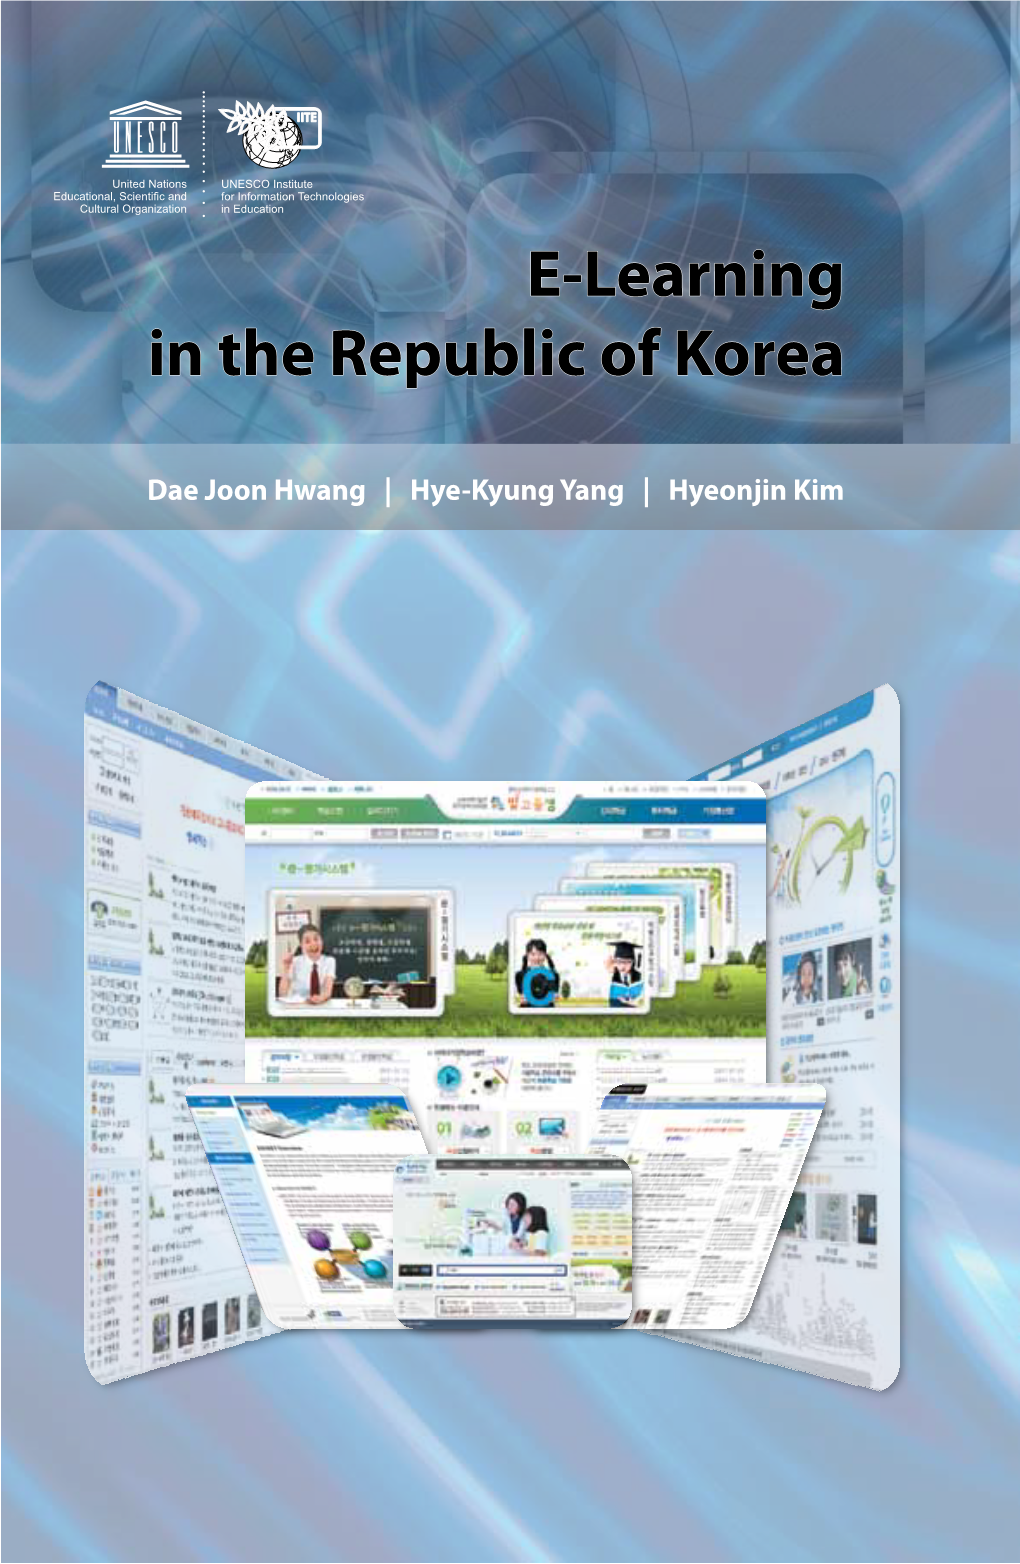 E-Learning in the Republic of Korea